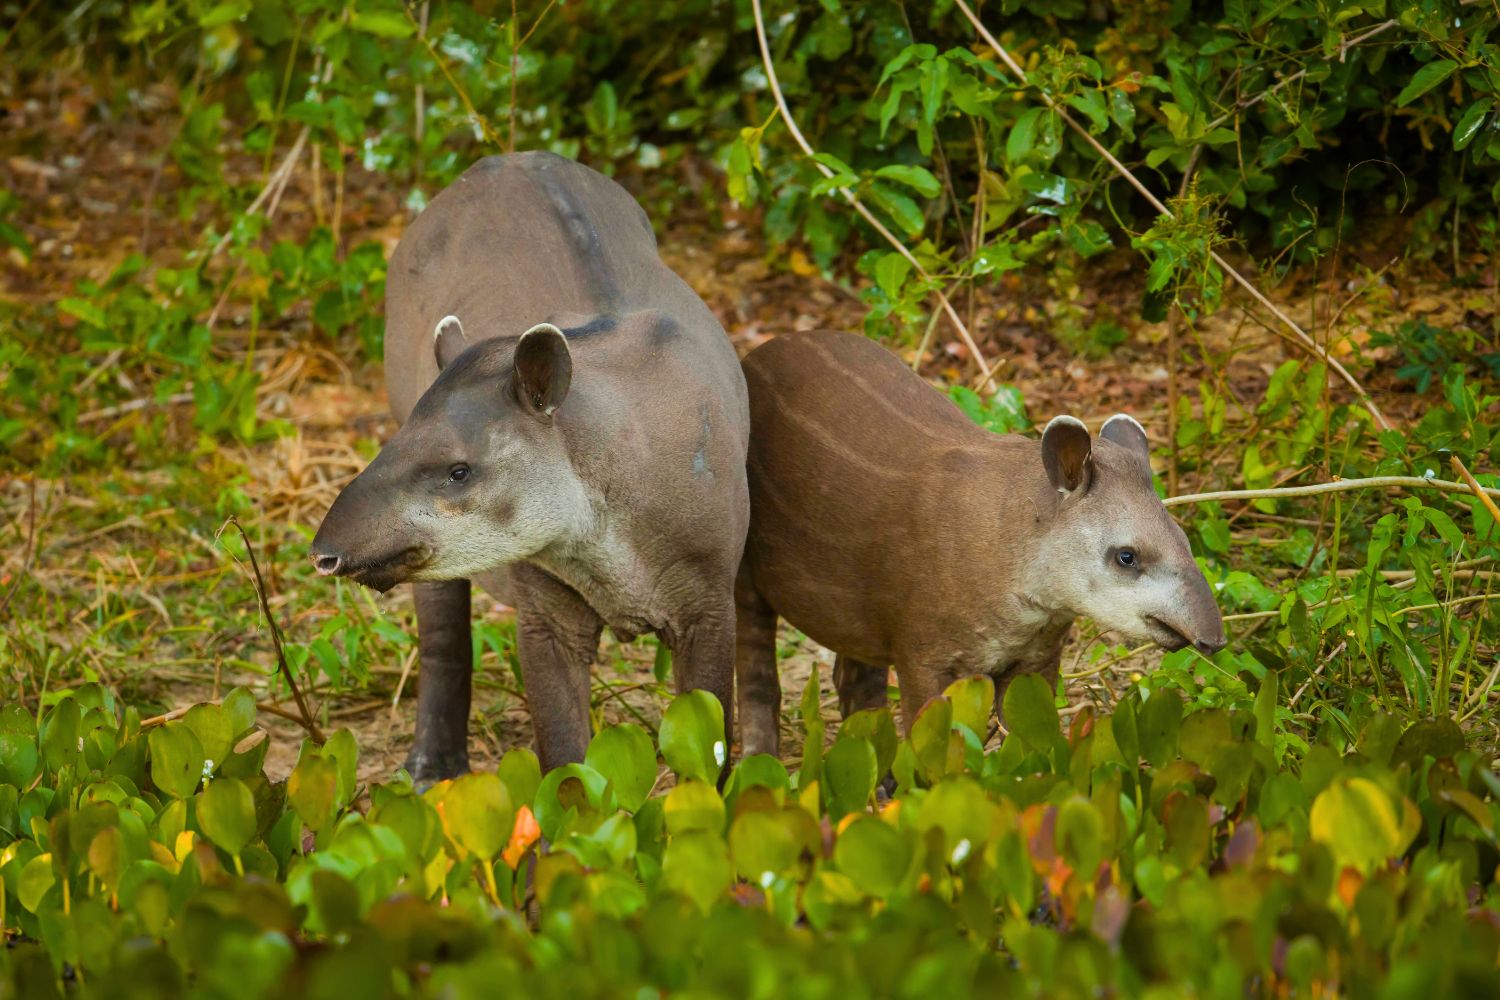 The South American Tapir